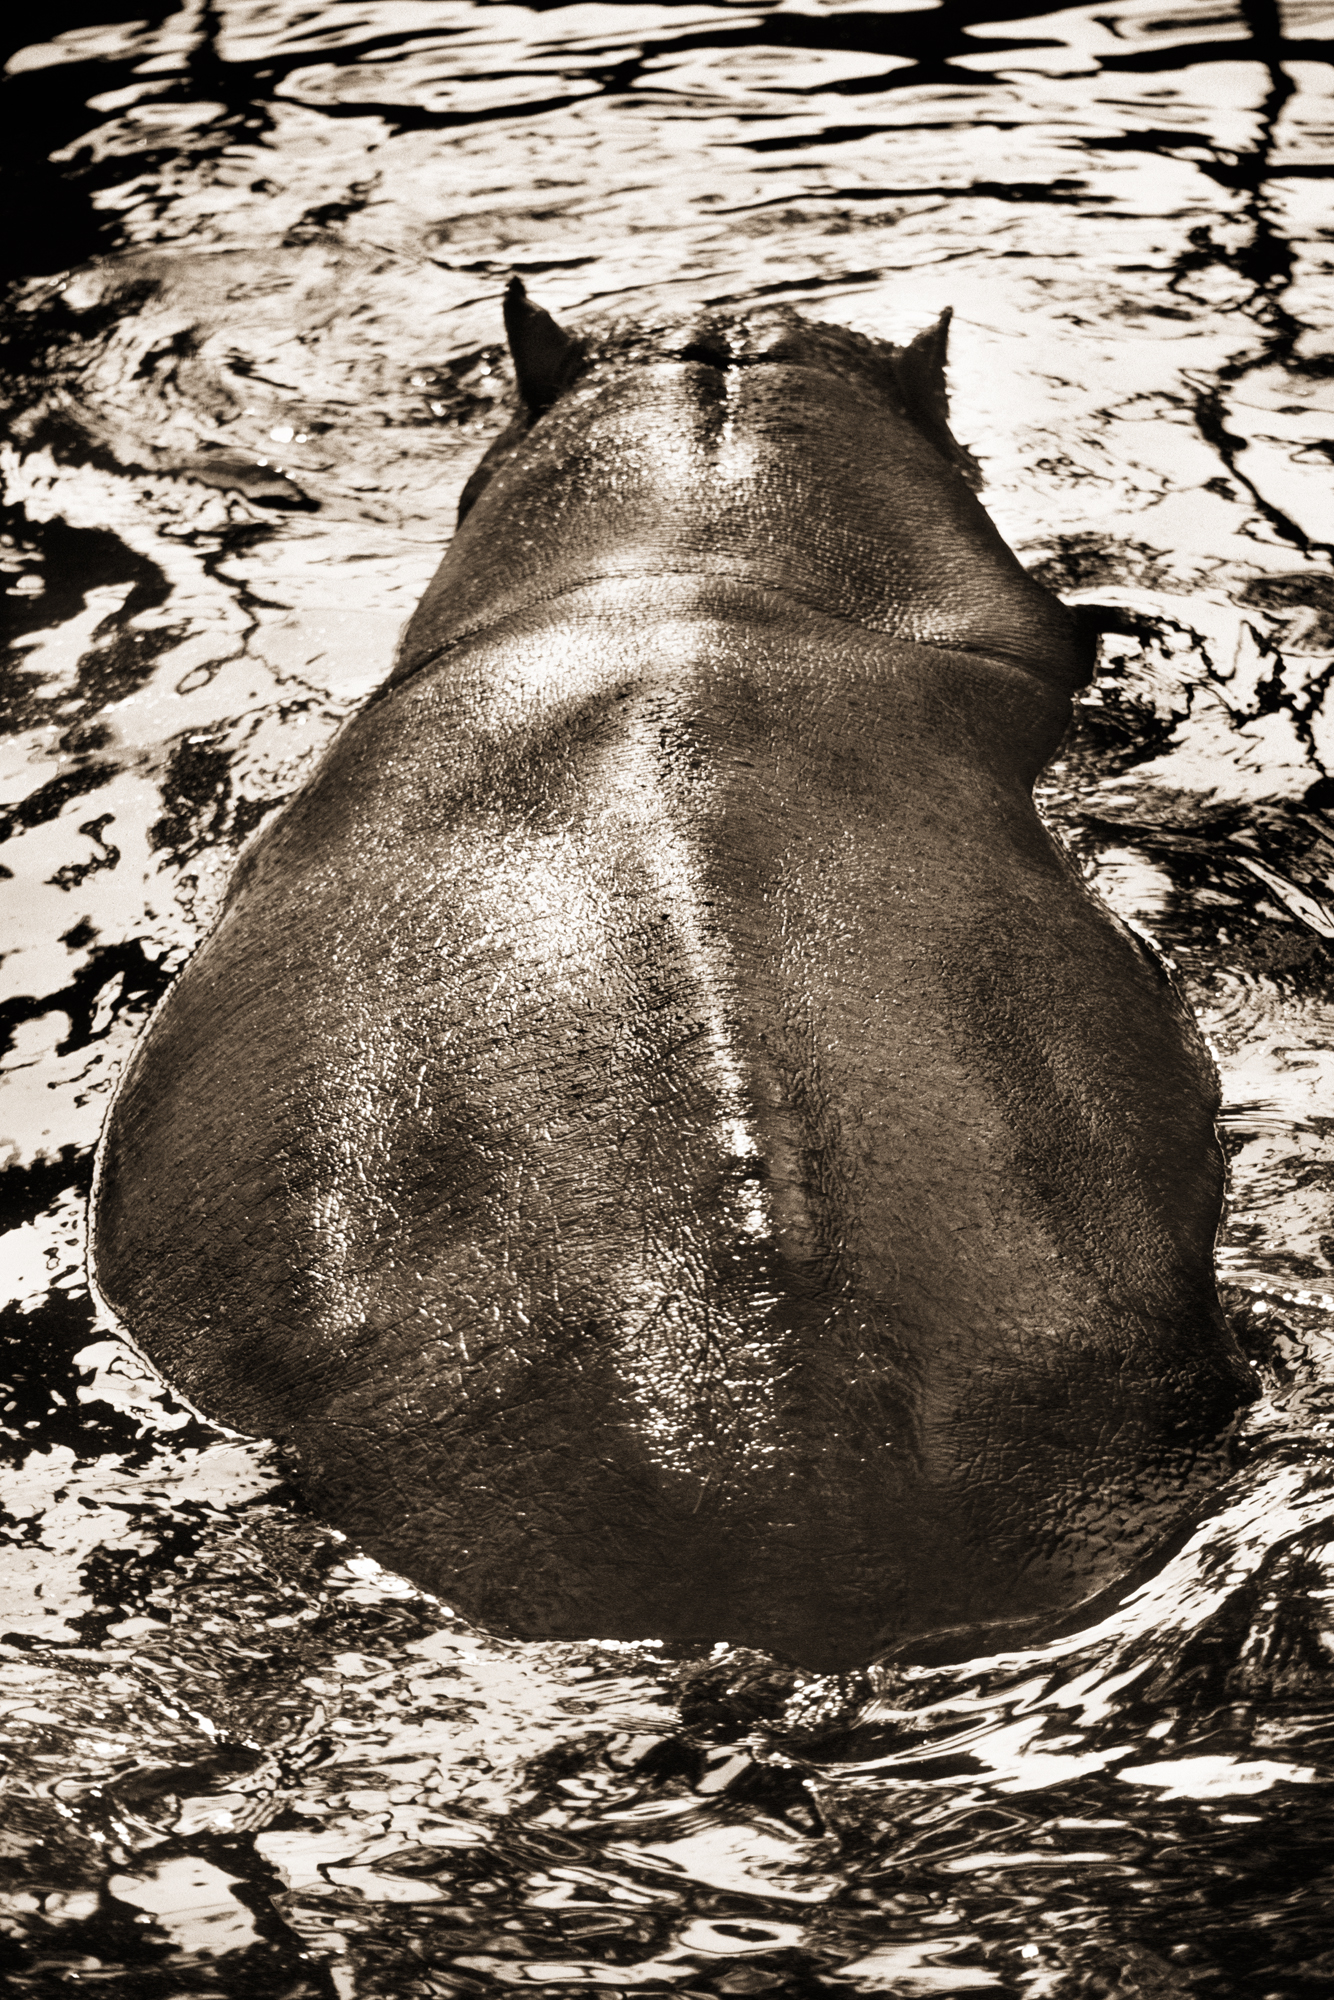 "Hippo, hippo amphibious," 1995-2001, "Henry Horenstein: The animal kingdom."